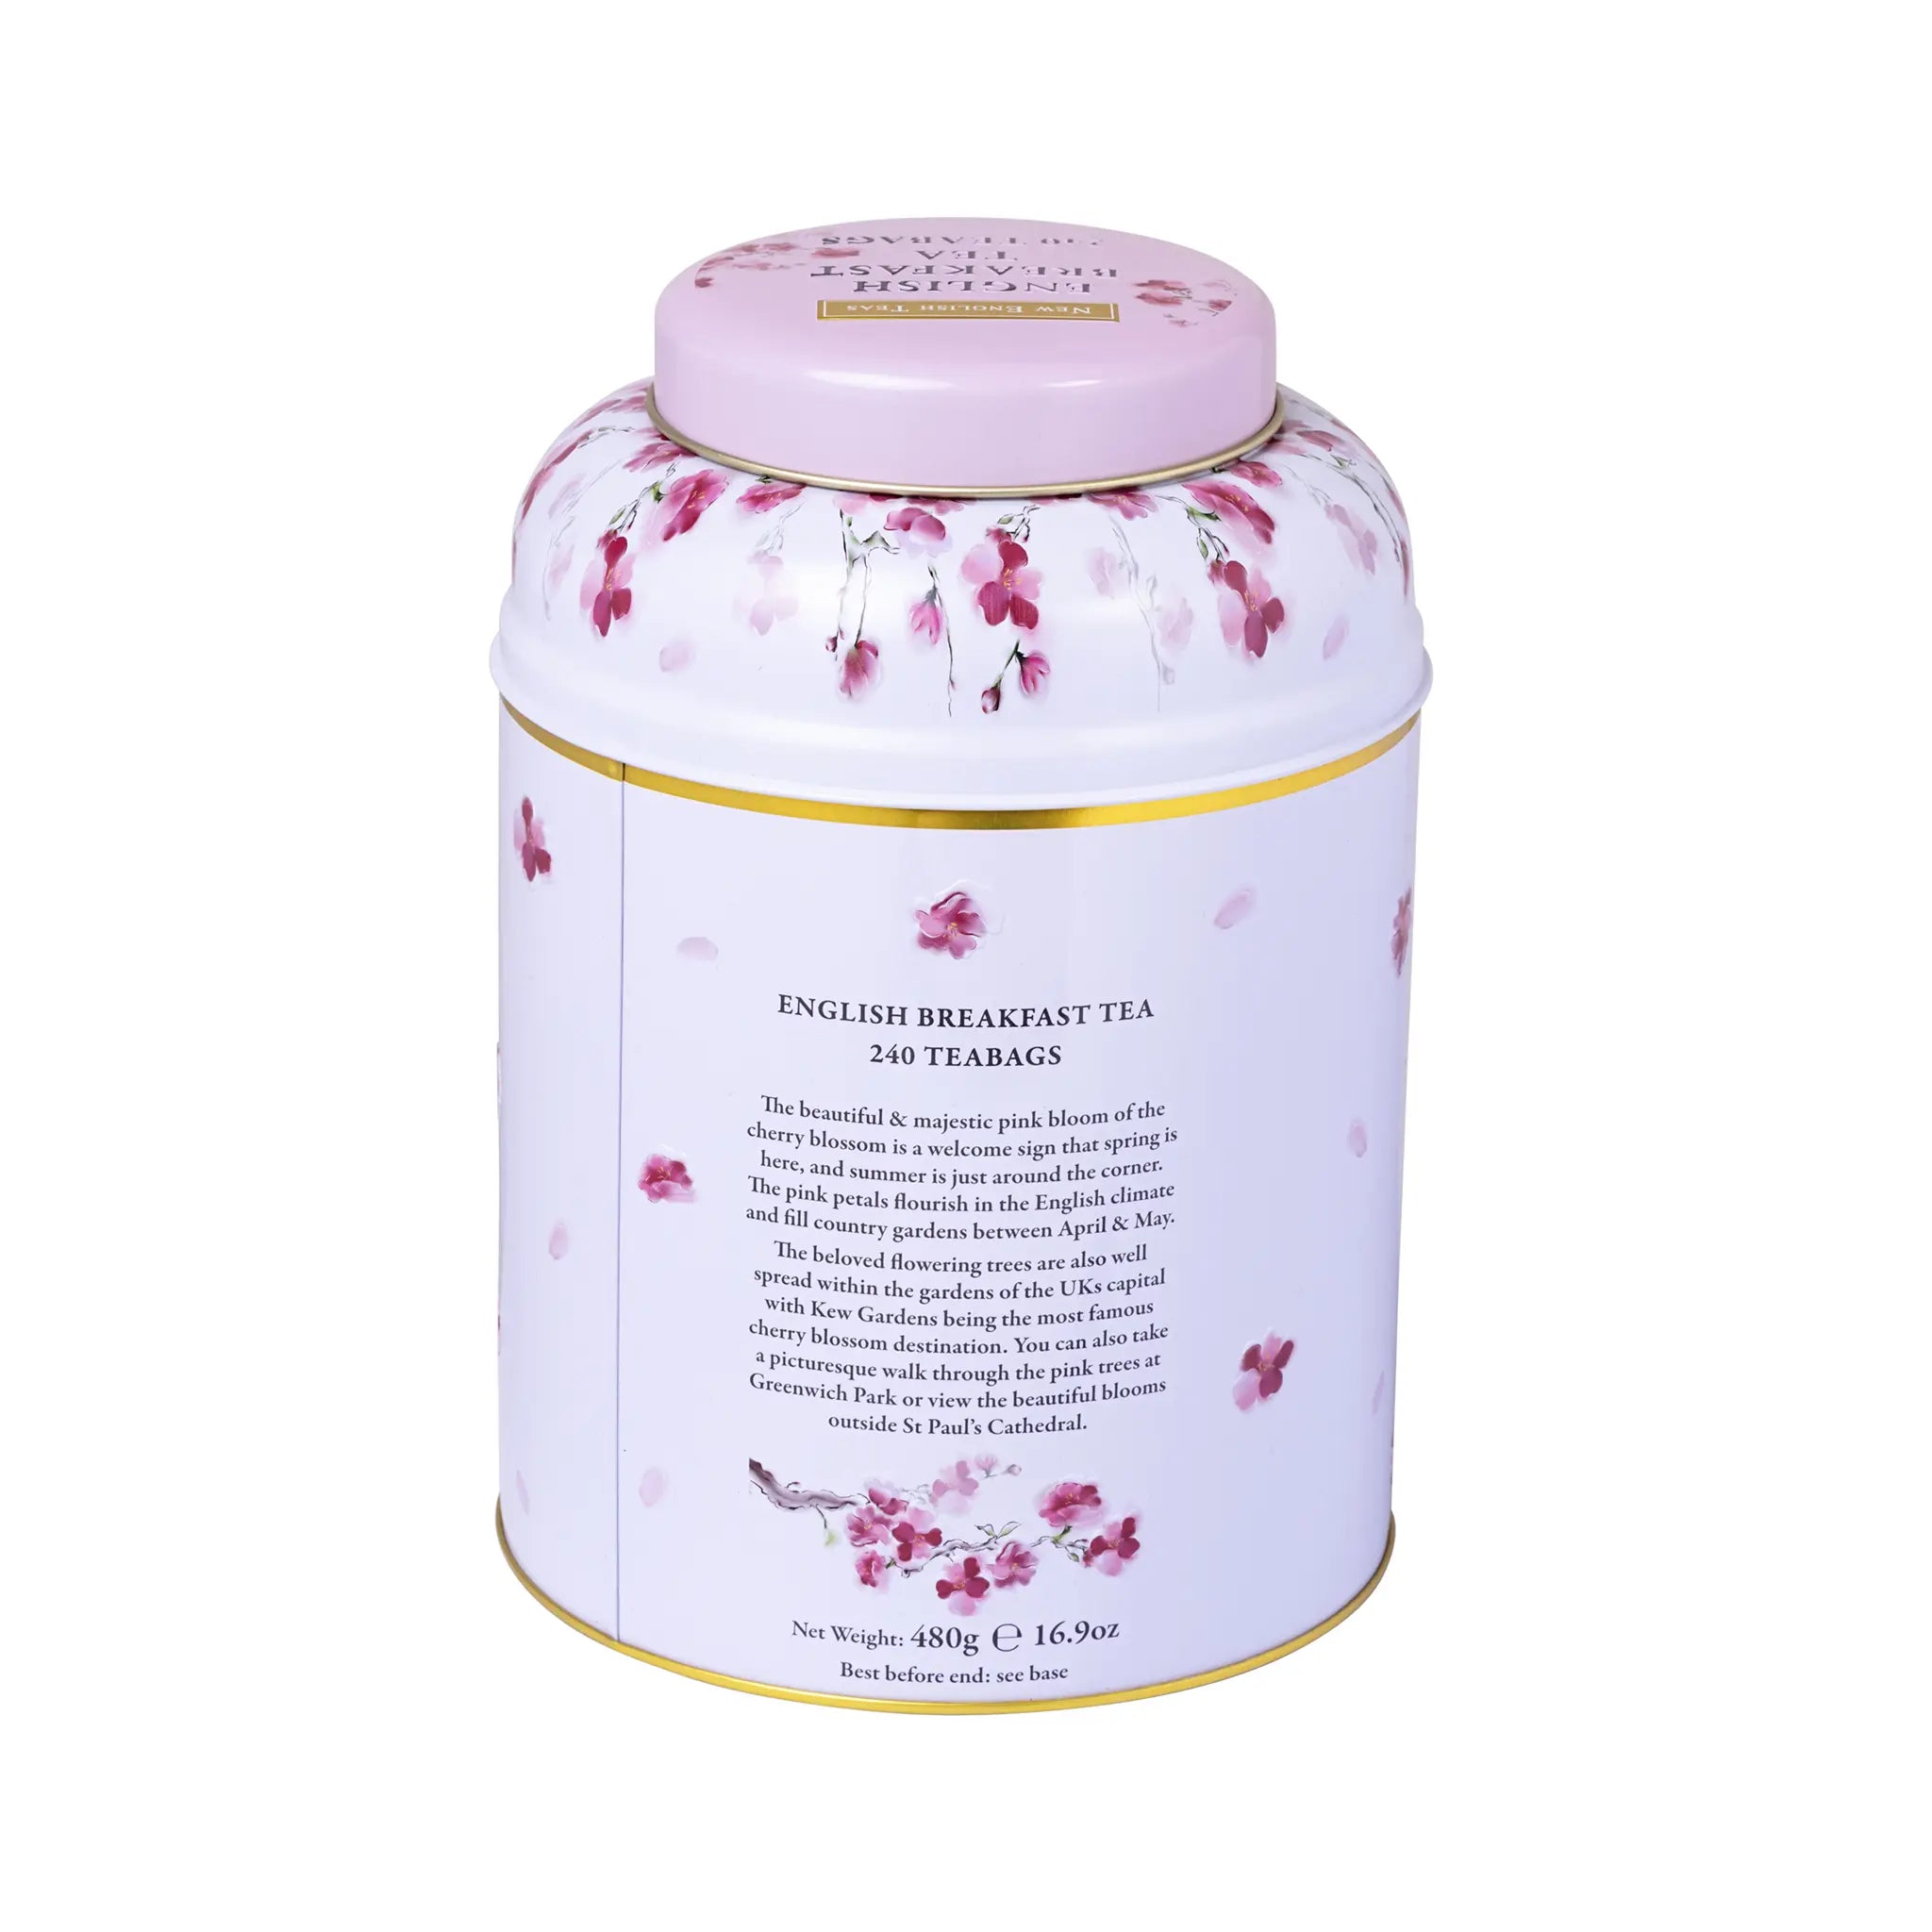 Cherry Blossoms Deluxe Tea Caddy Tea Tins New English Teas 